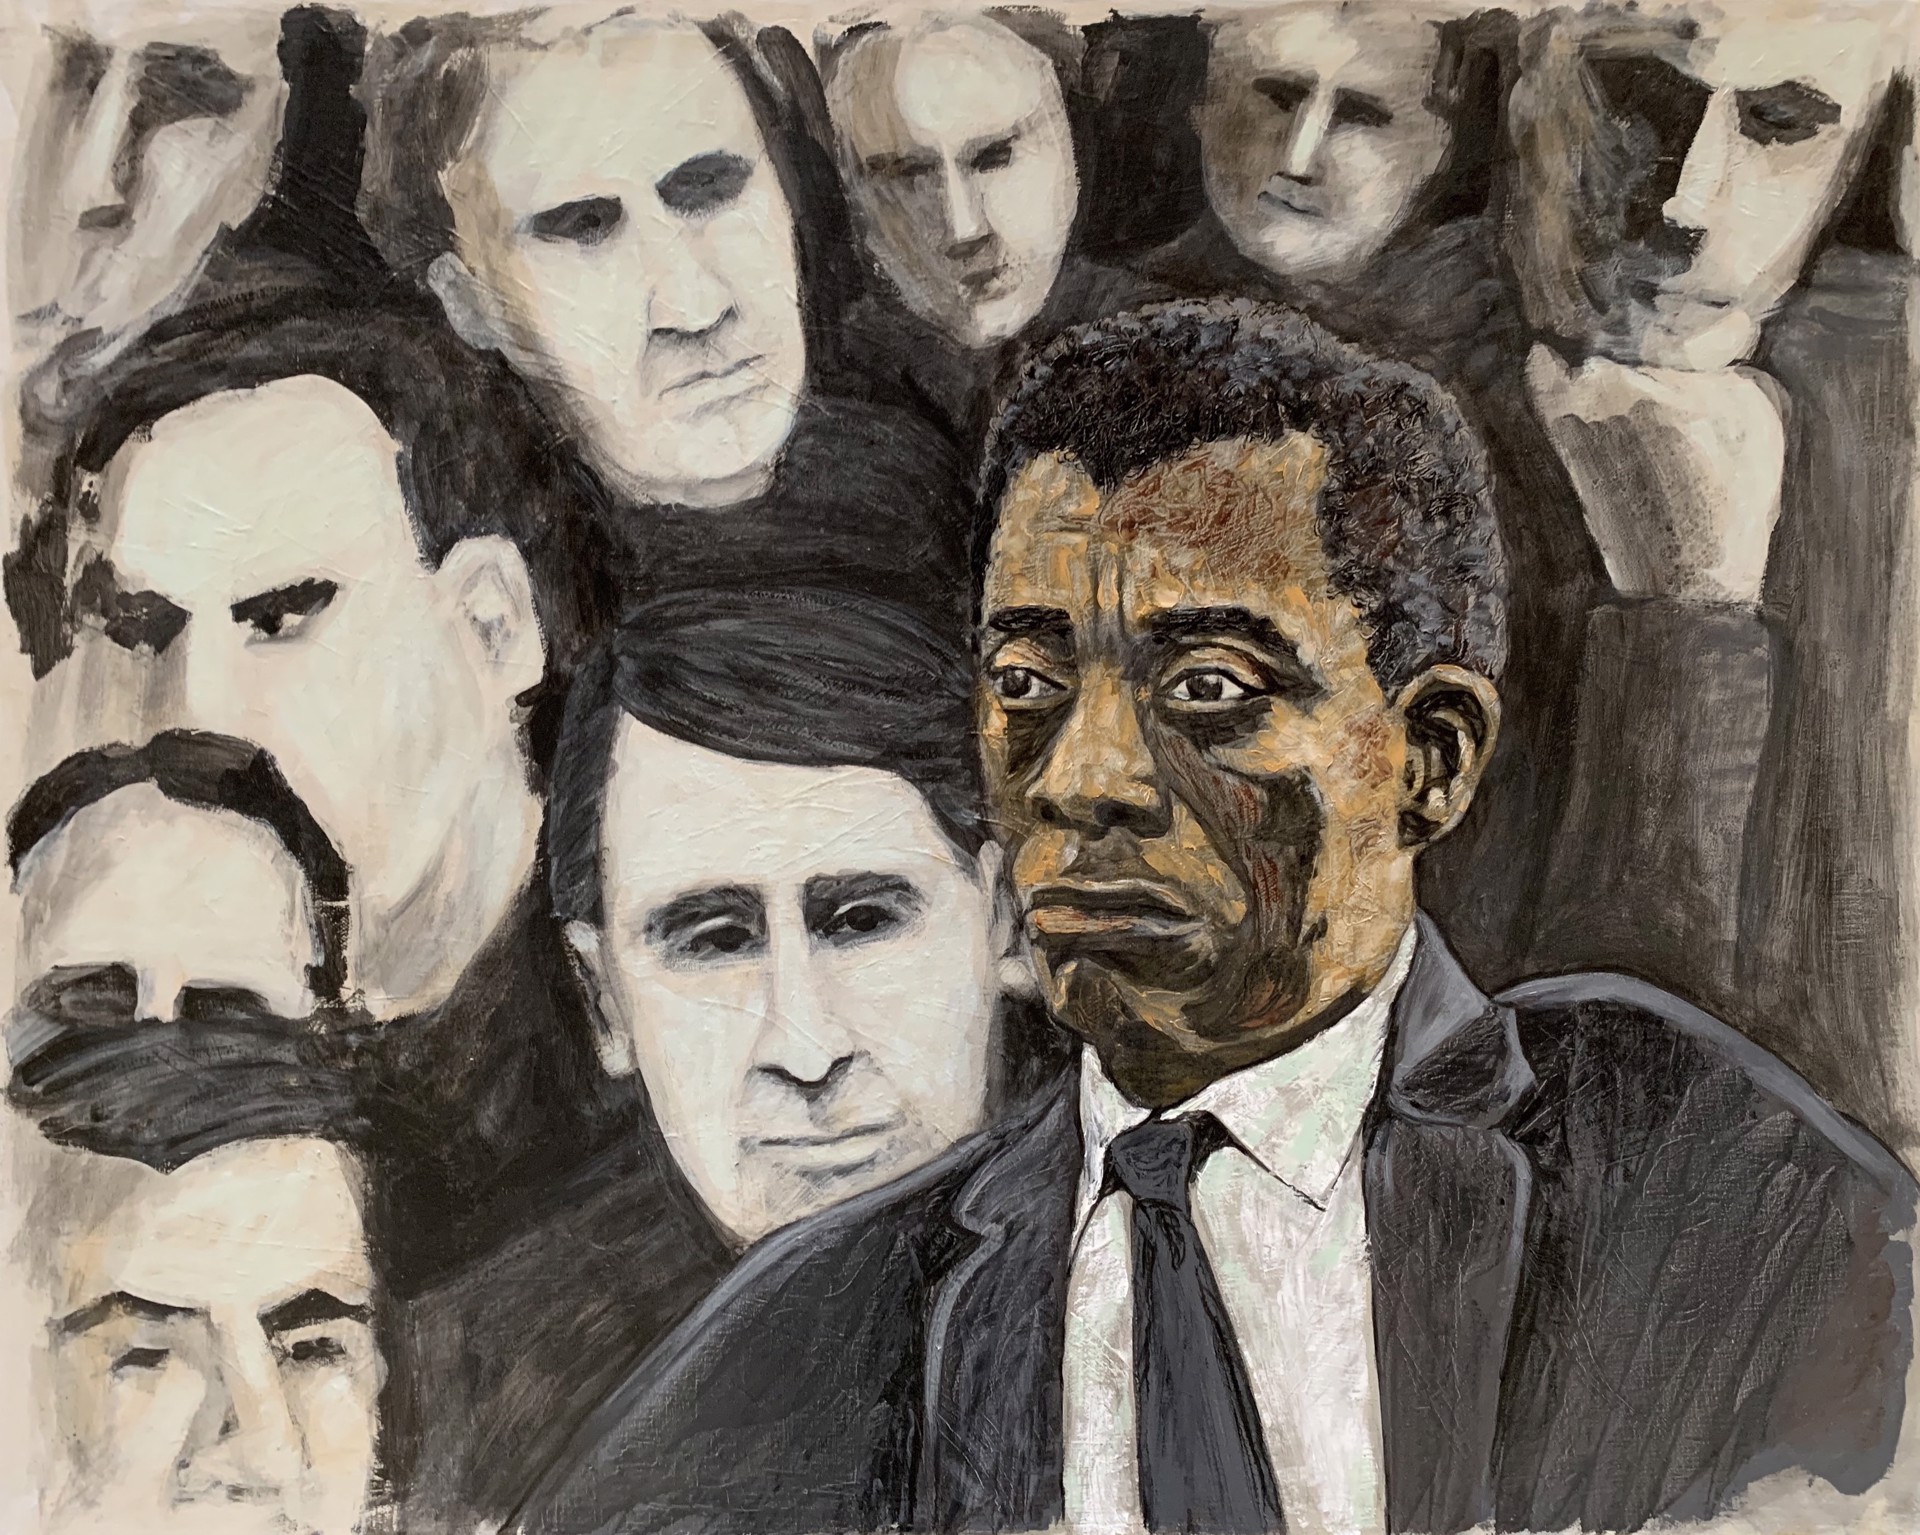 James Baldwin Speaks! by Mark Hix